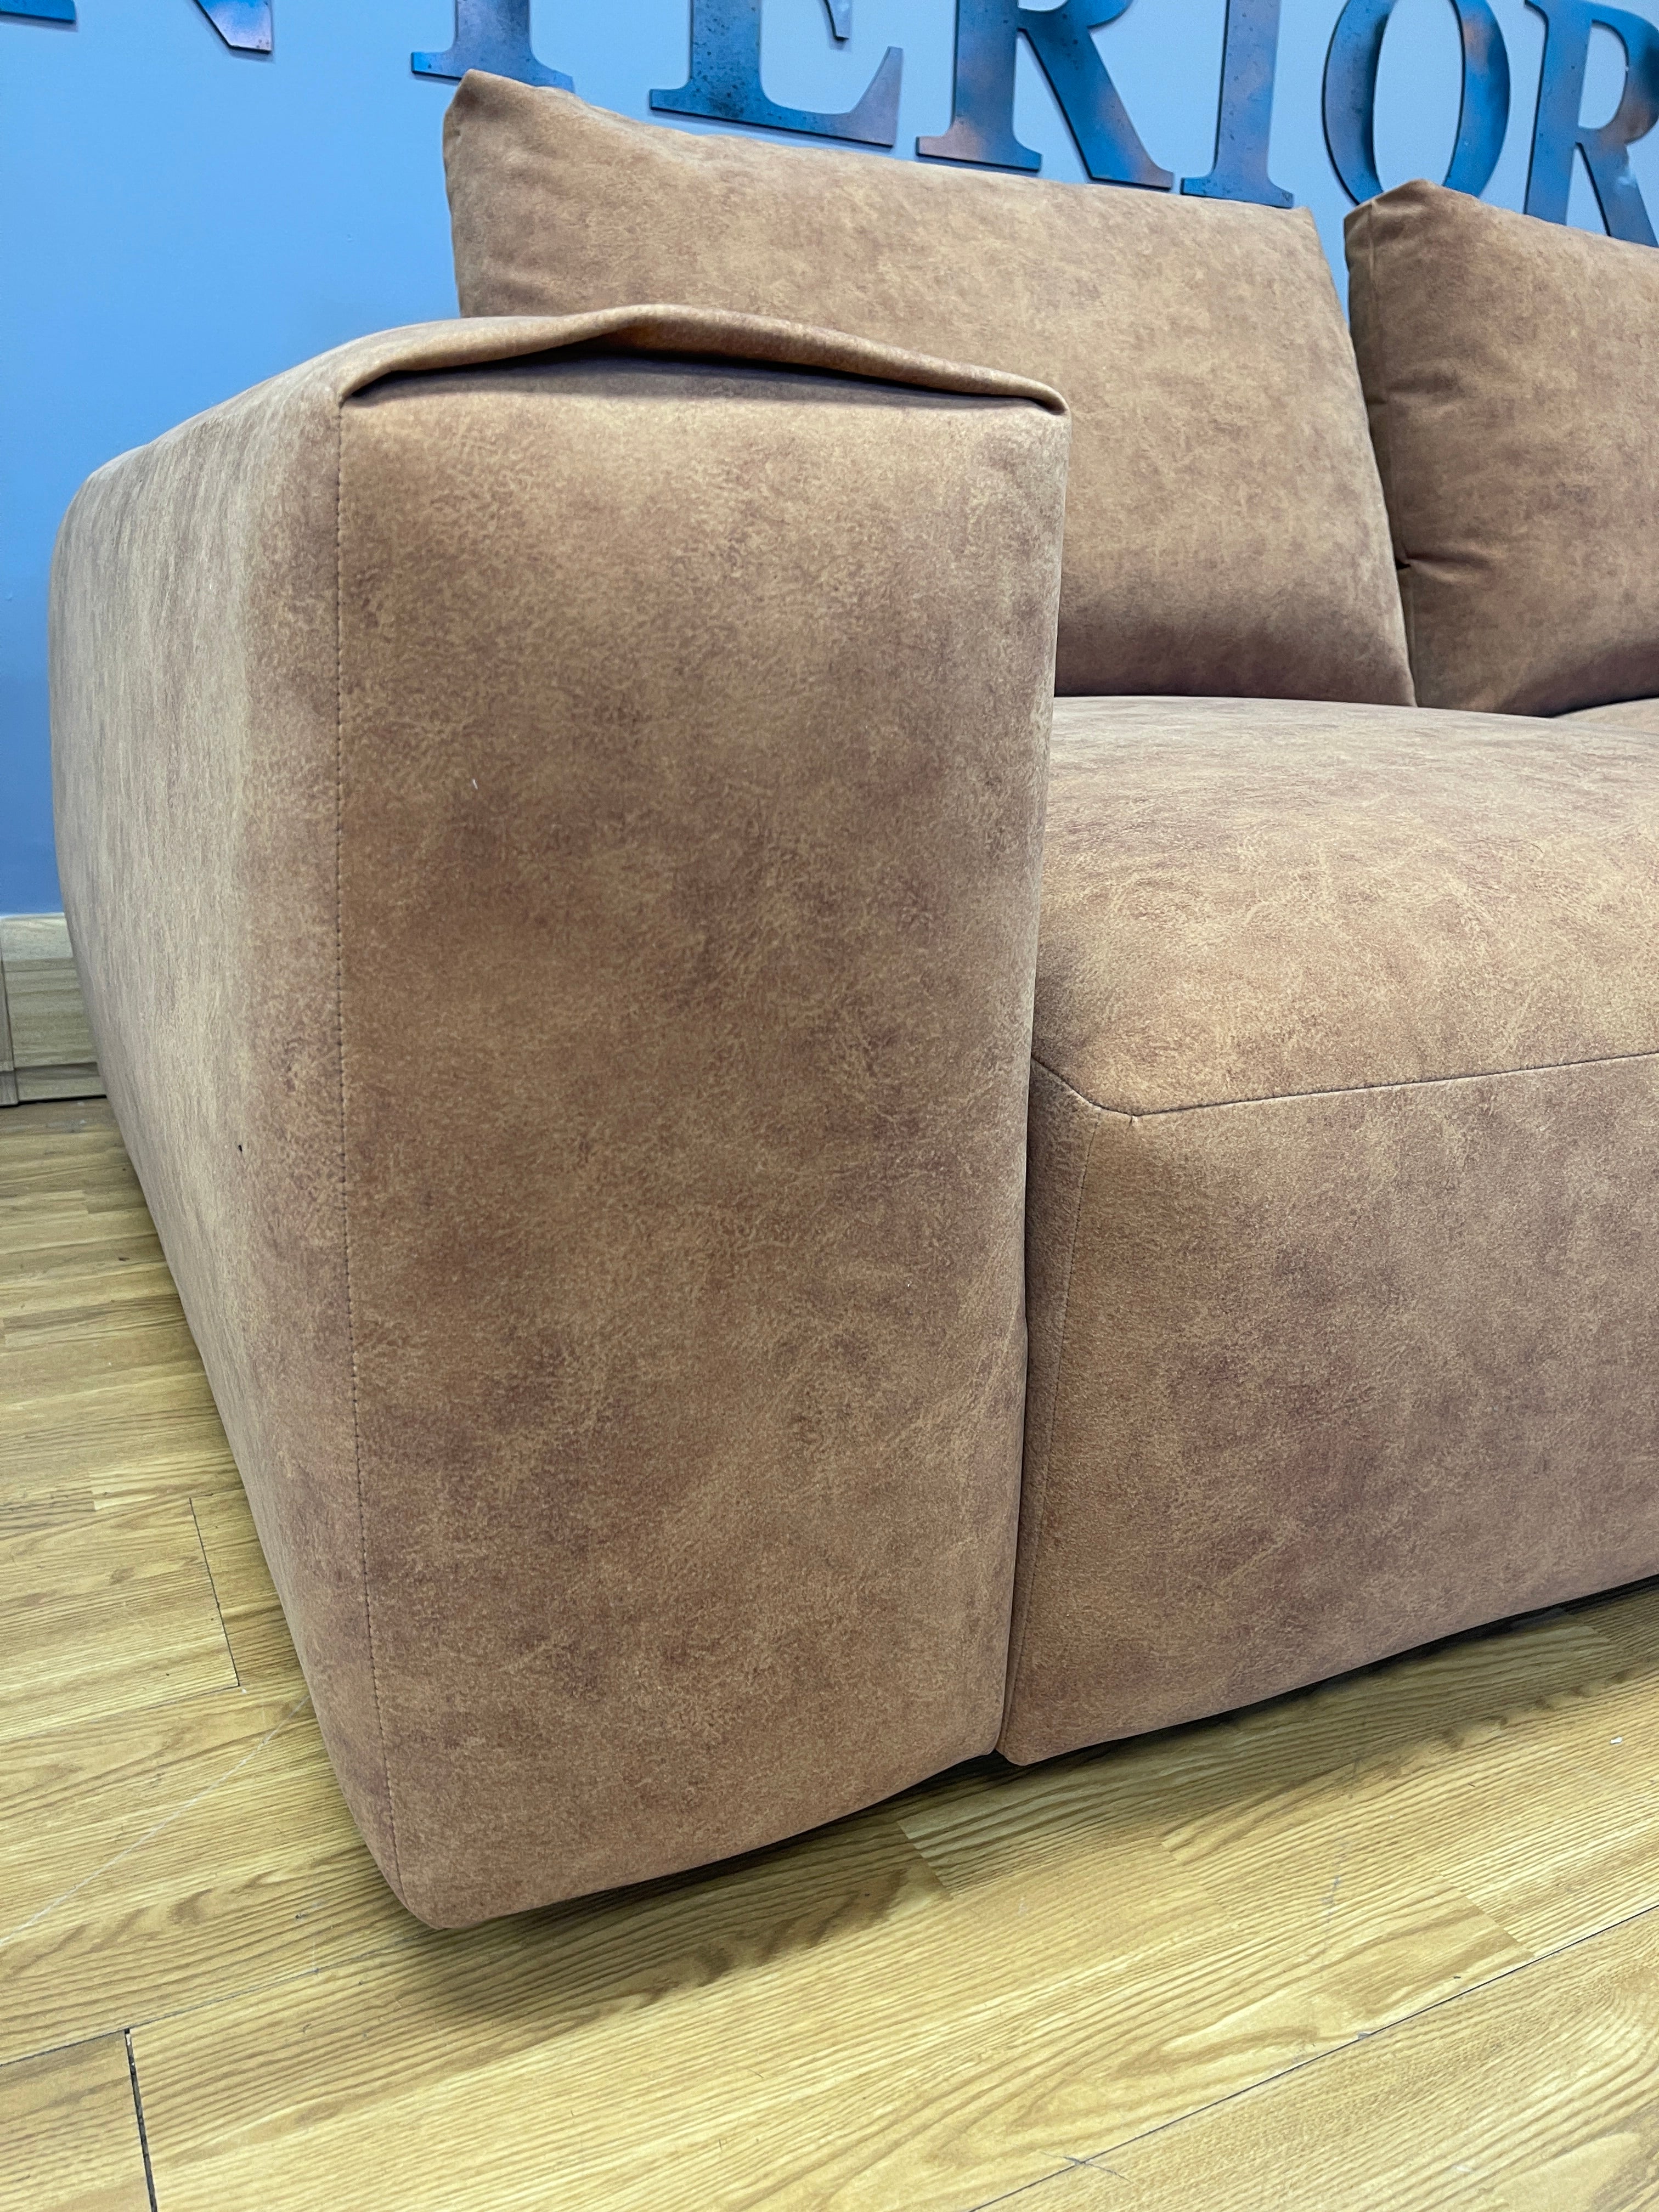 WHITE LABEL ROCCO split 4 seater sofa in tan faux suede / distressed velvet